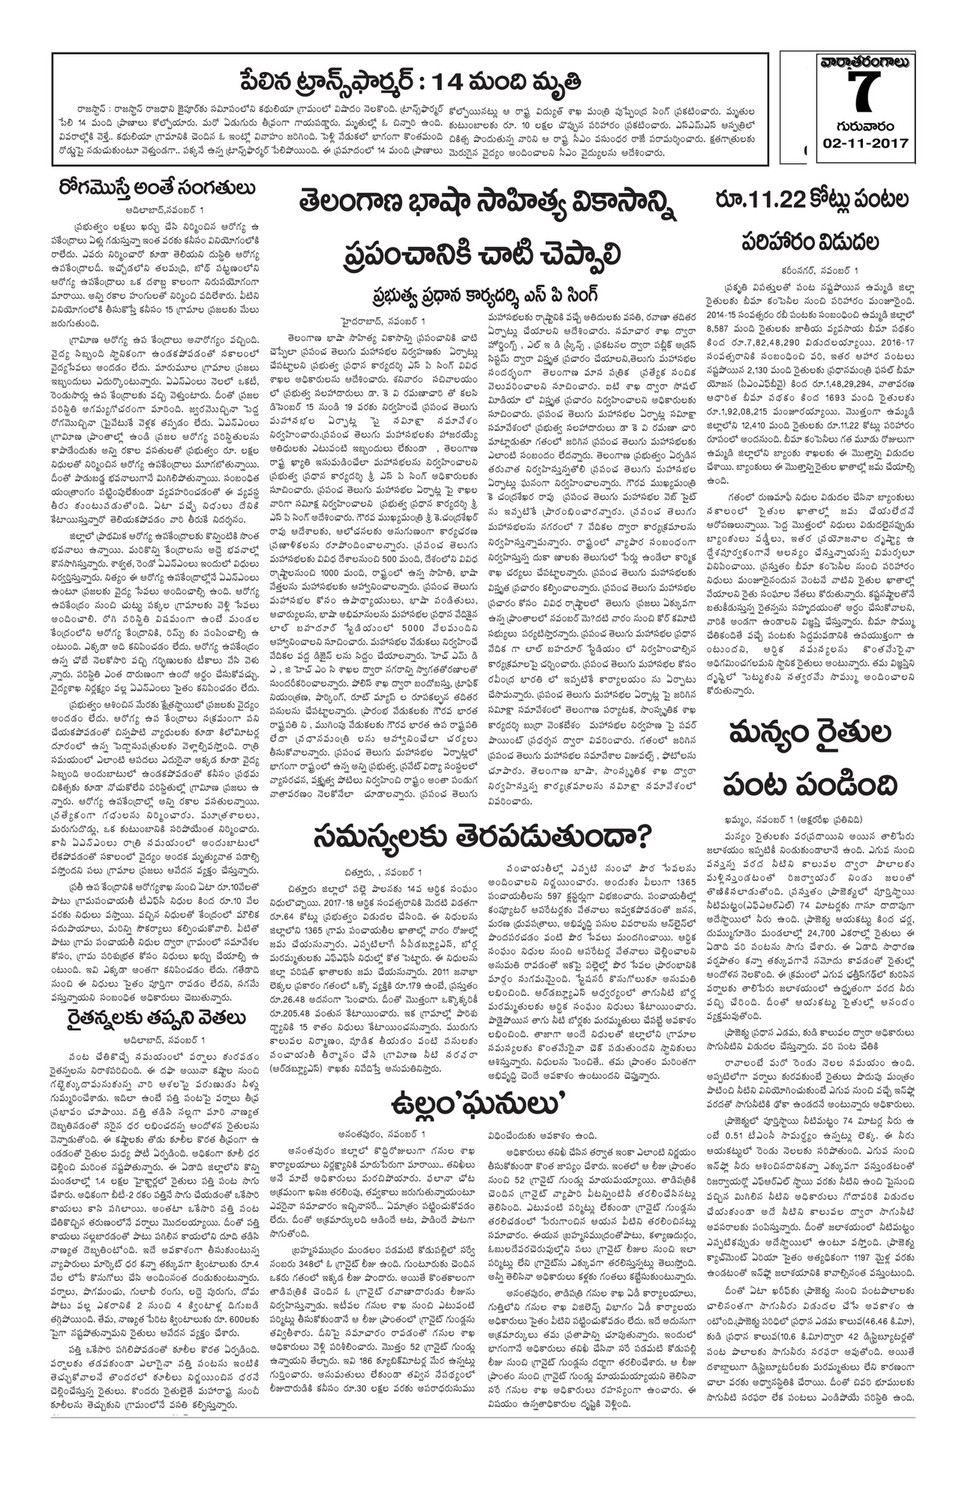 Saisankalpainfo 02 11 17 Vaarthatarangalu Hyd Full Page 6 Created With Publitas Com